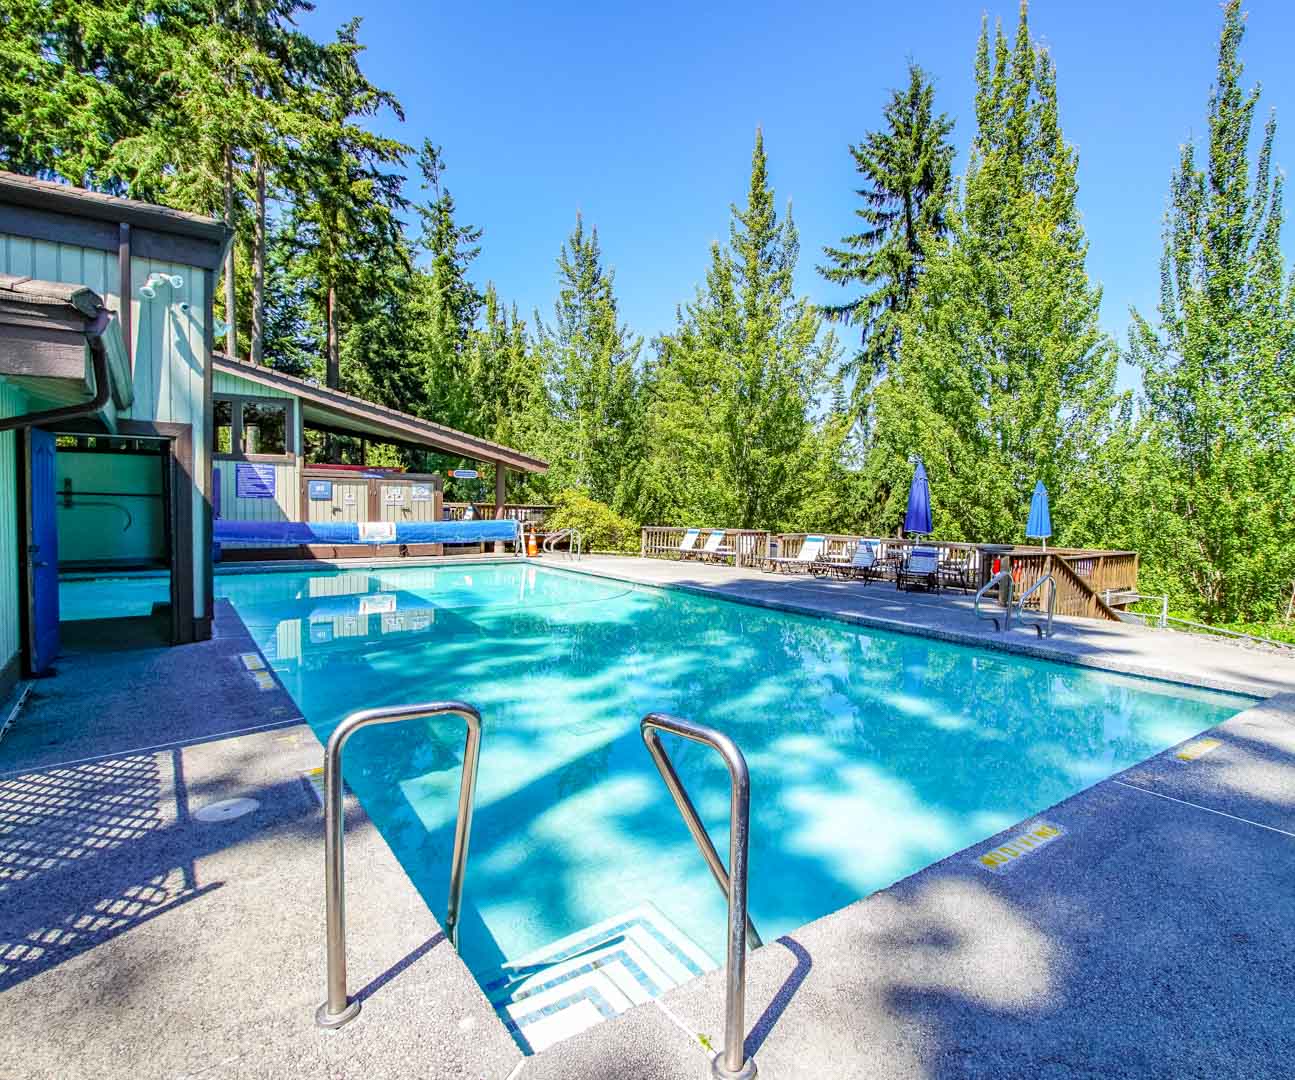 A crisp outdoor swimming pool at VRI's Kala Point Village in Port Townsend, Washington.